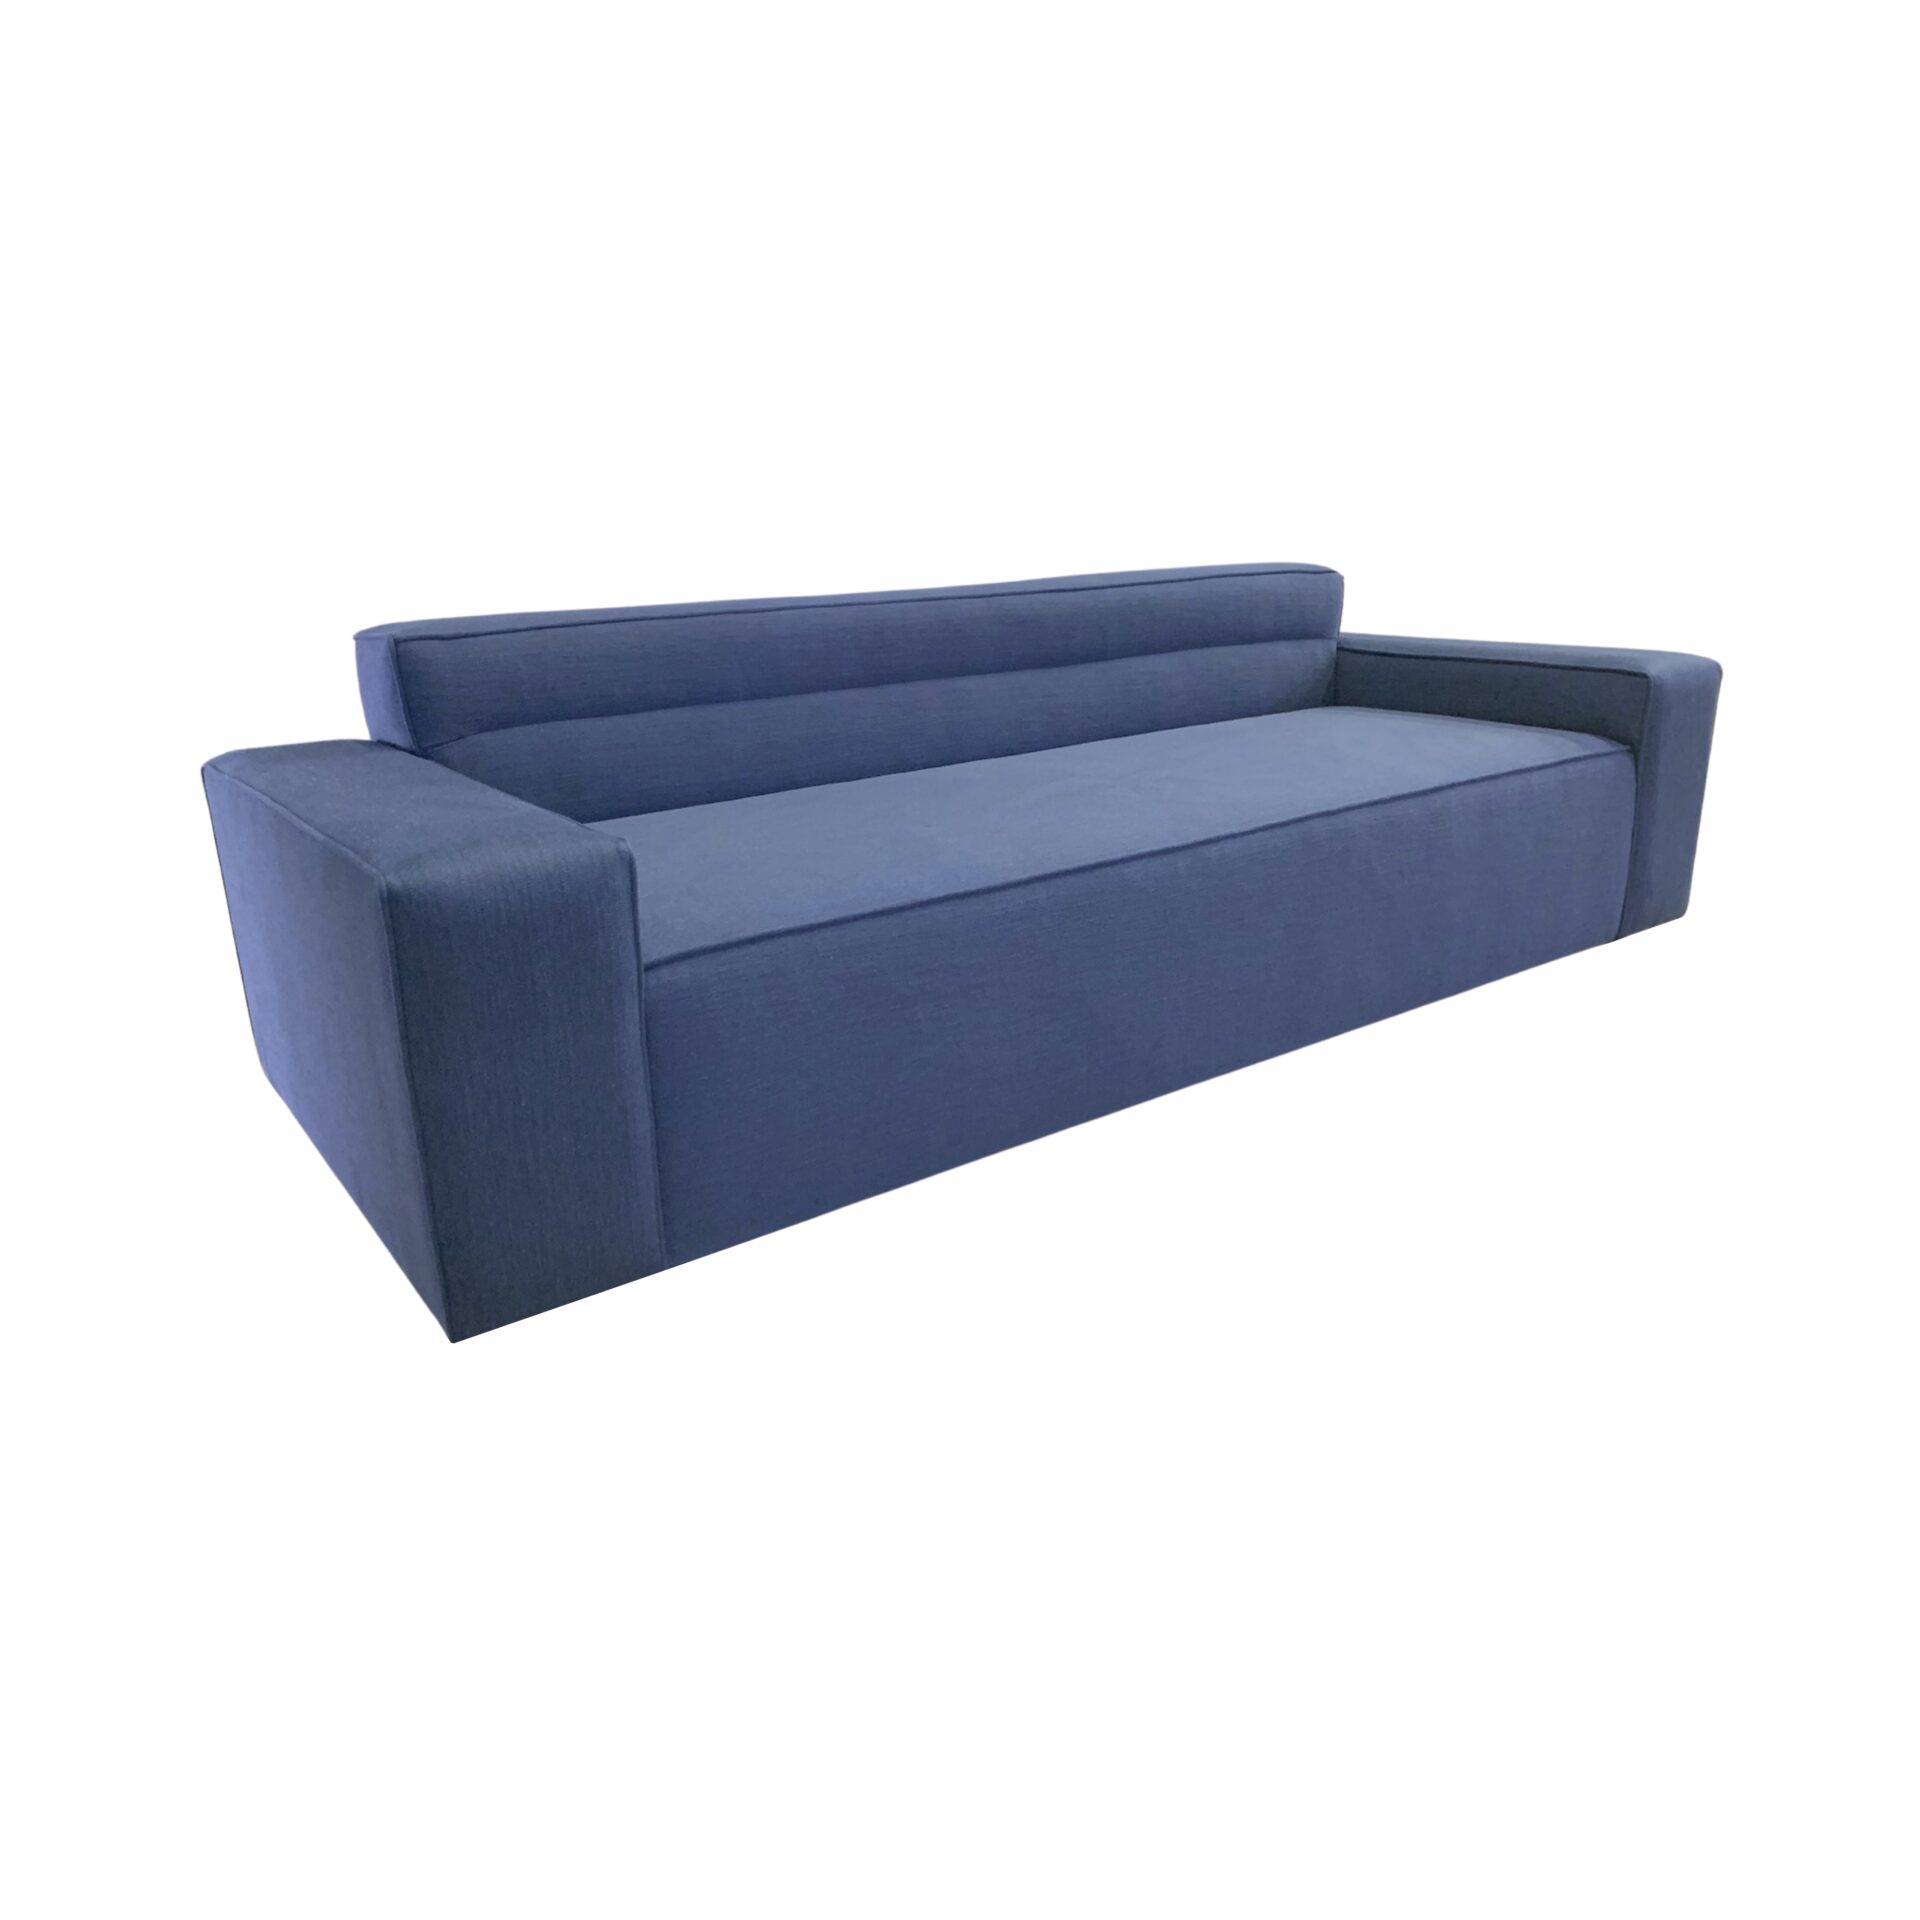 PRINCETON-upholstered-sofa-luxury-furniture-blend-home-furnishings